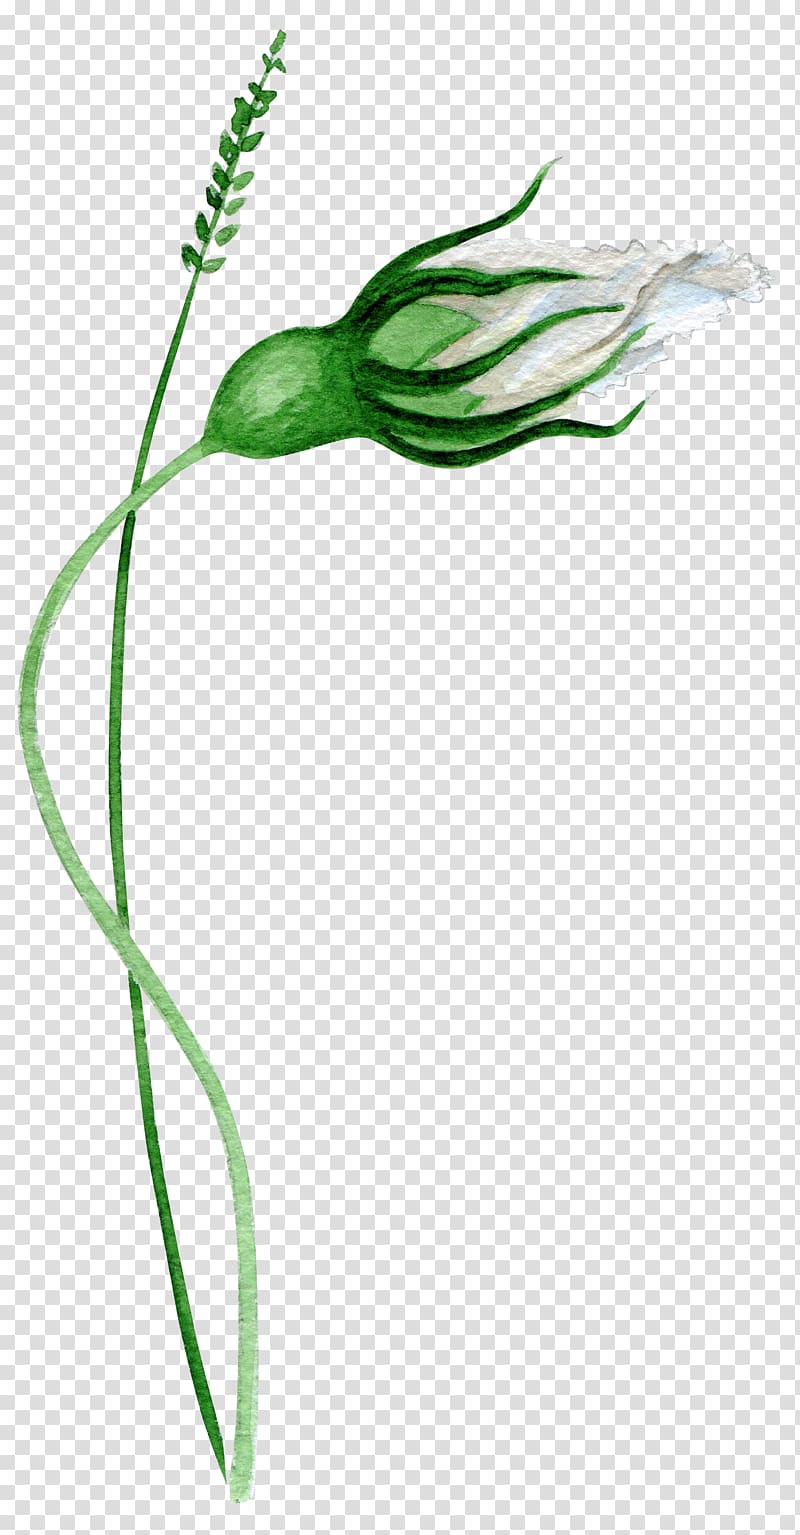 Google Flower, Hand painted green flower bones transparent background PNG clipart